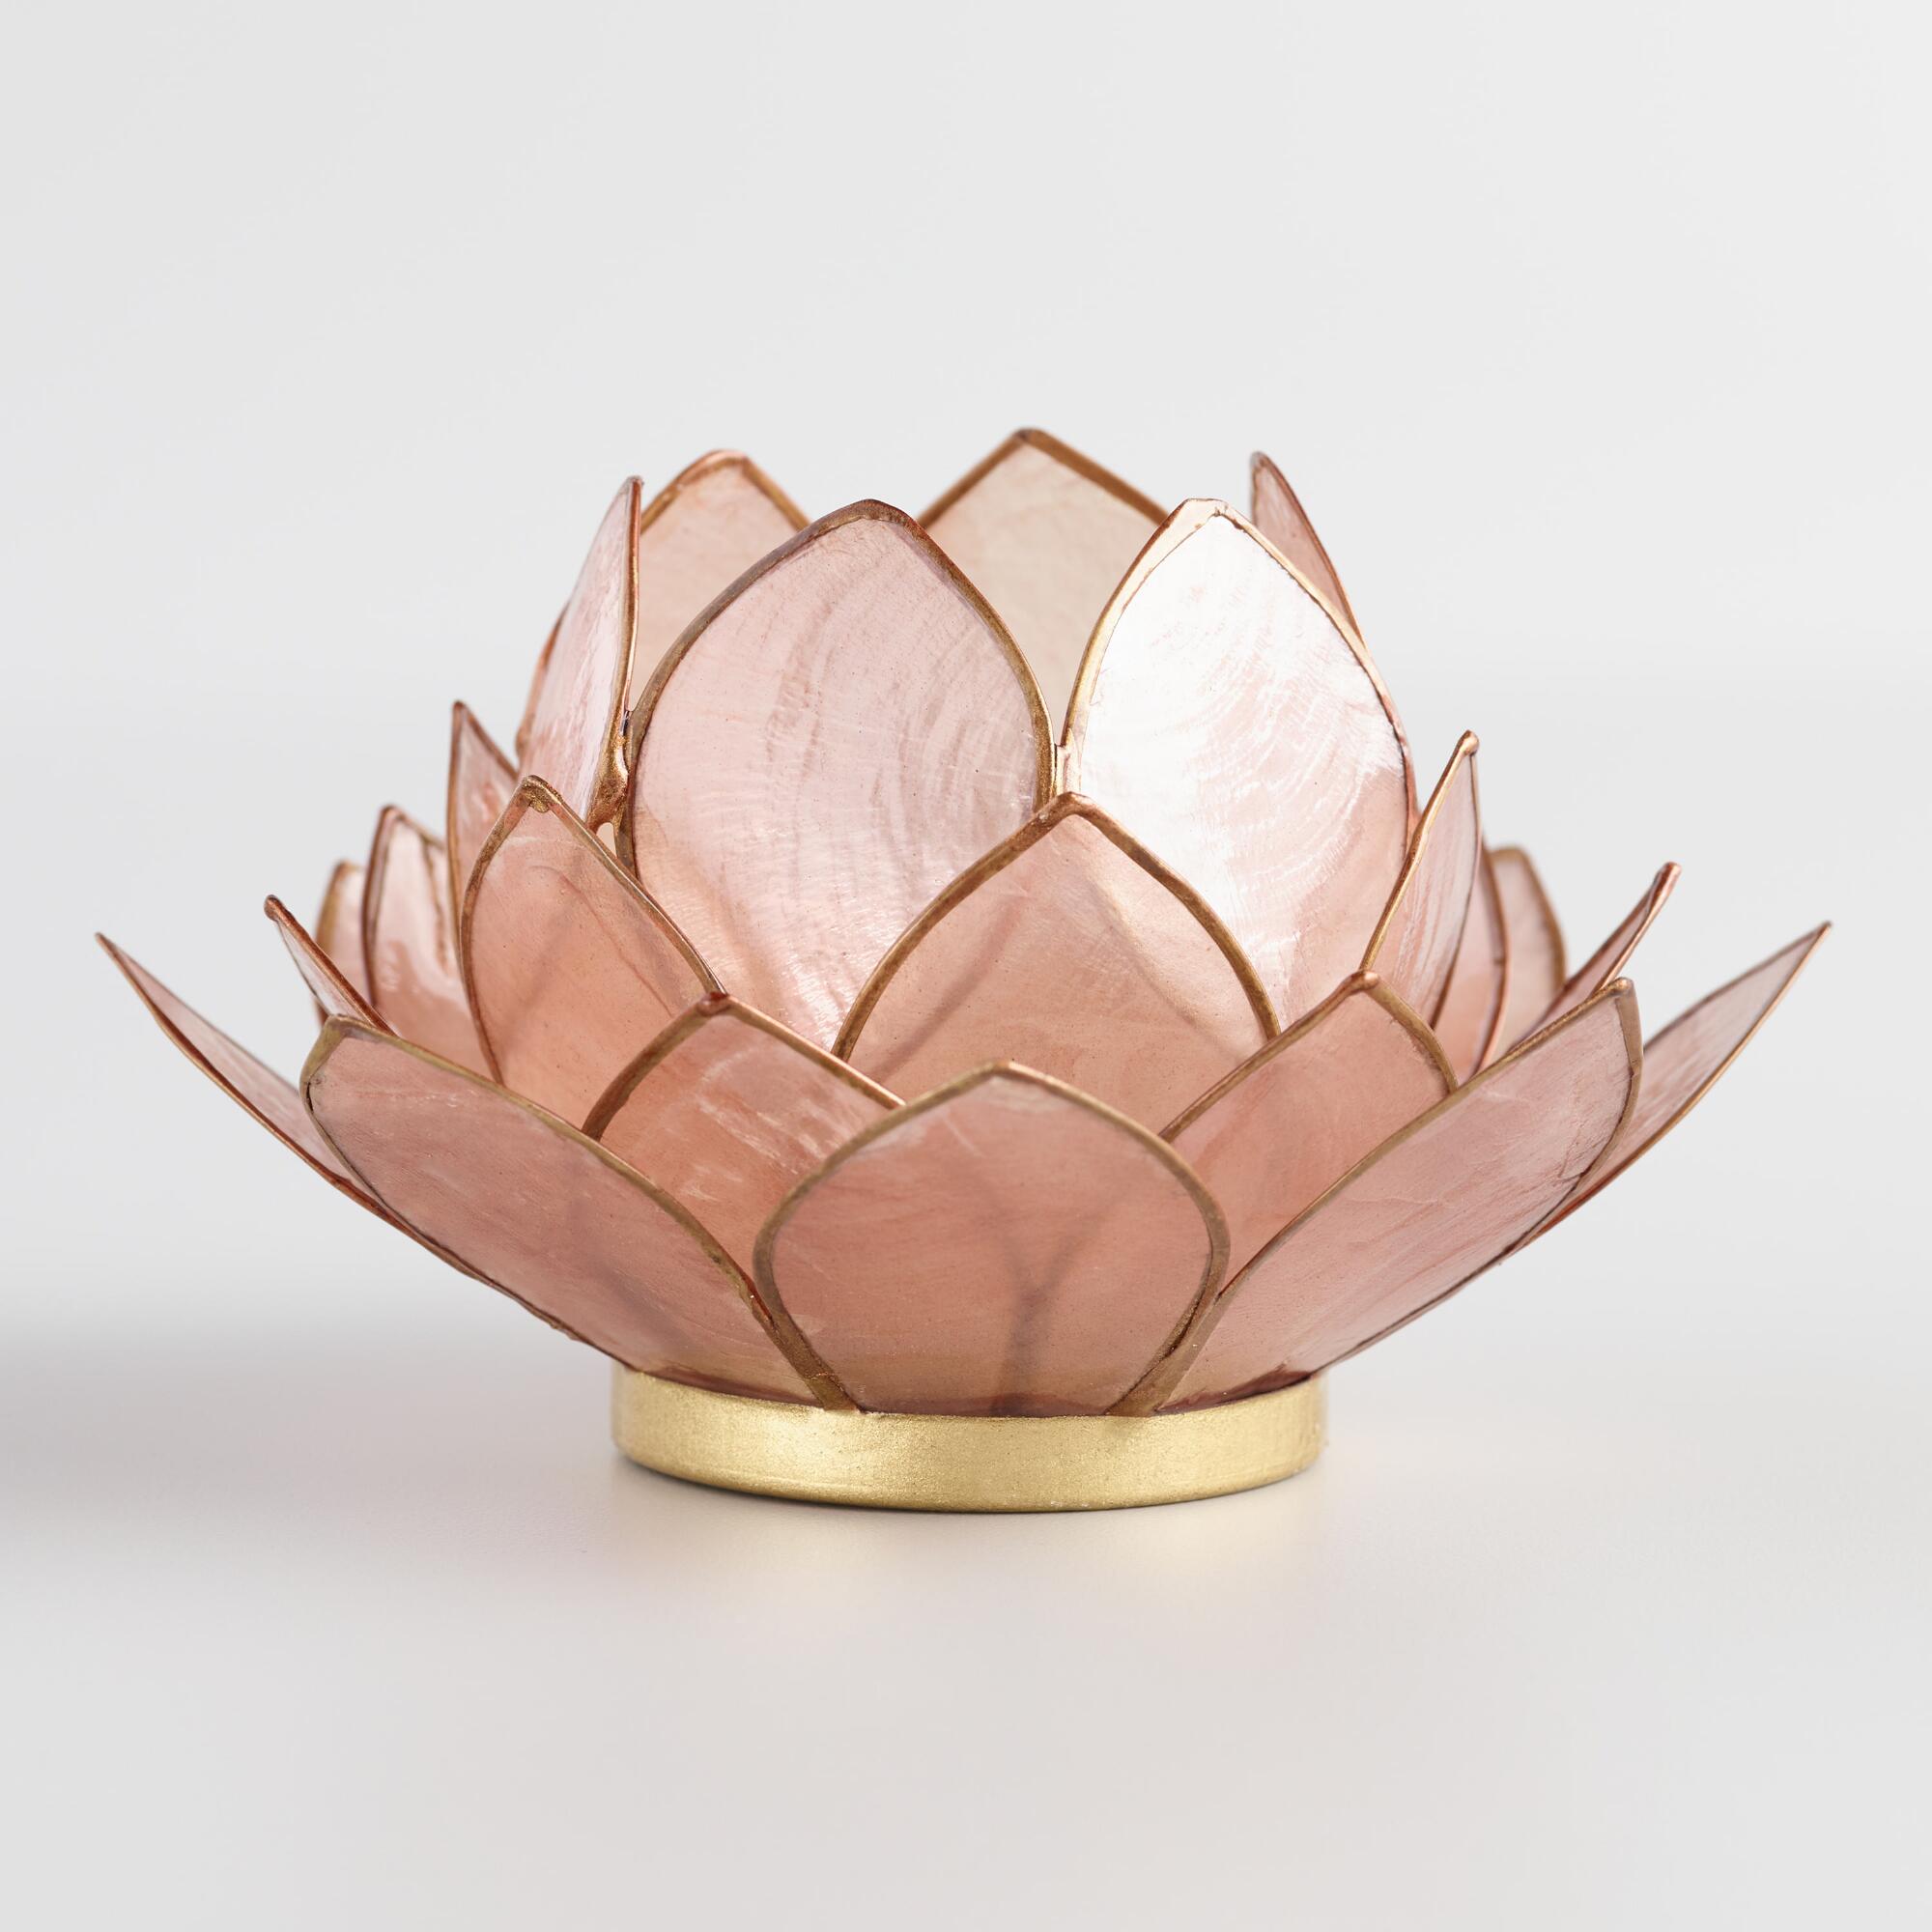 Blush Capiz Lotus Tealight Candle Holder: Pink - Capiz Shell by World Market